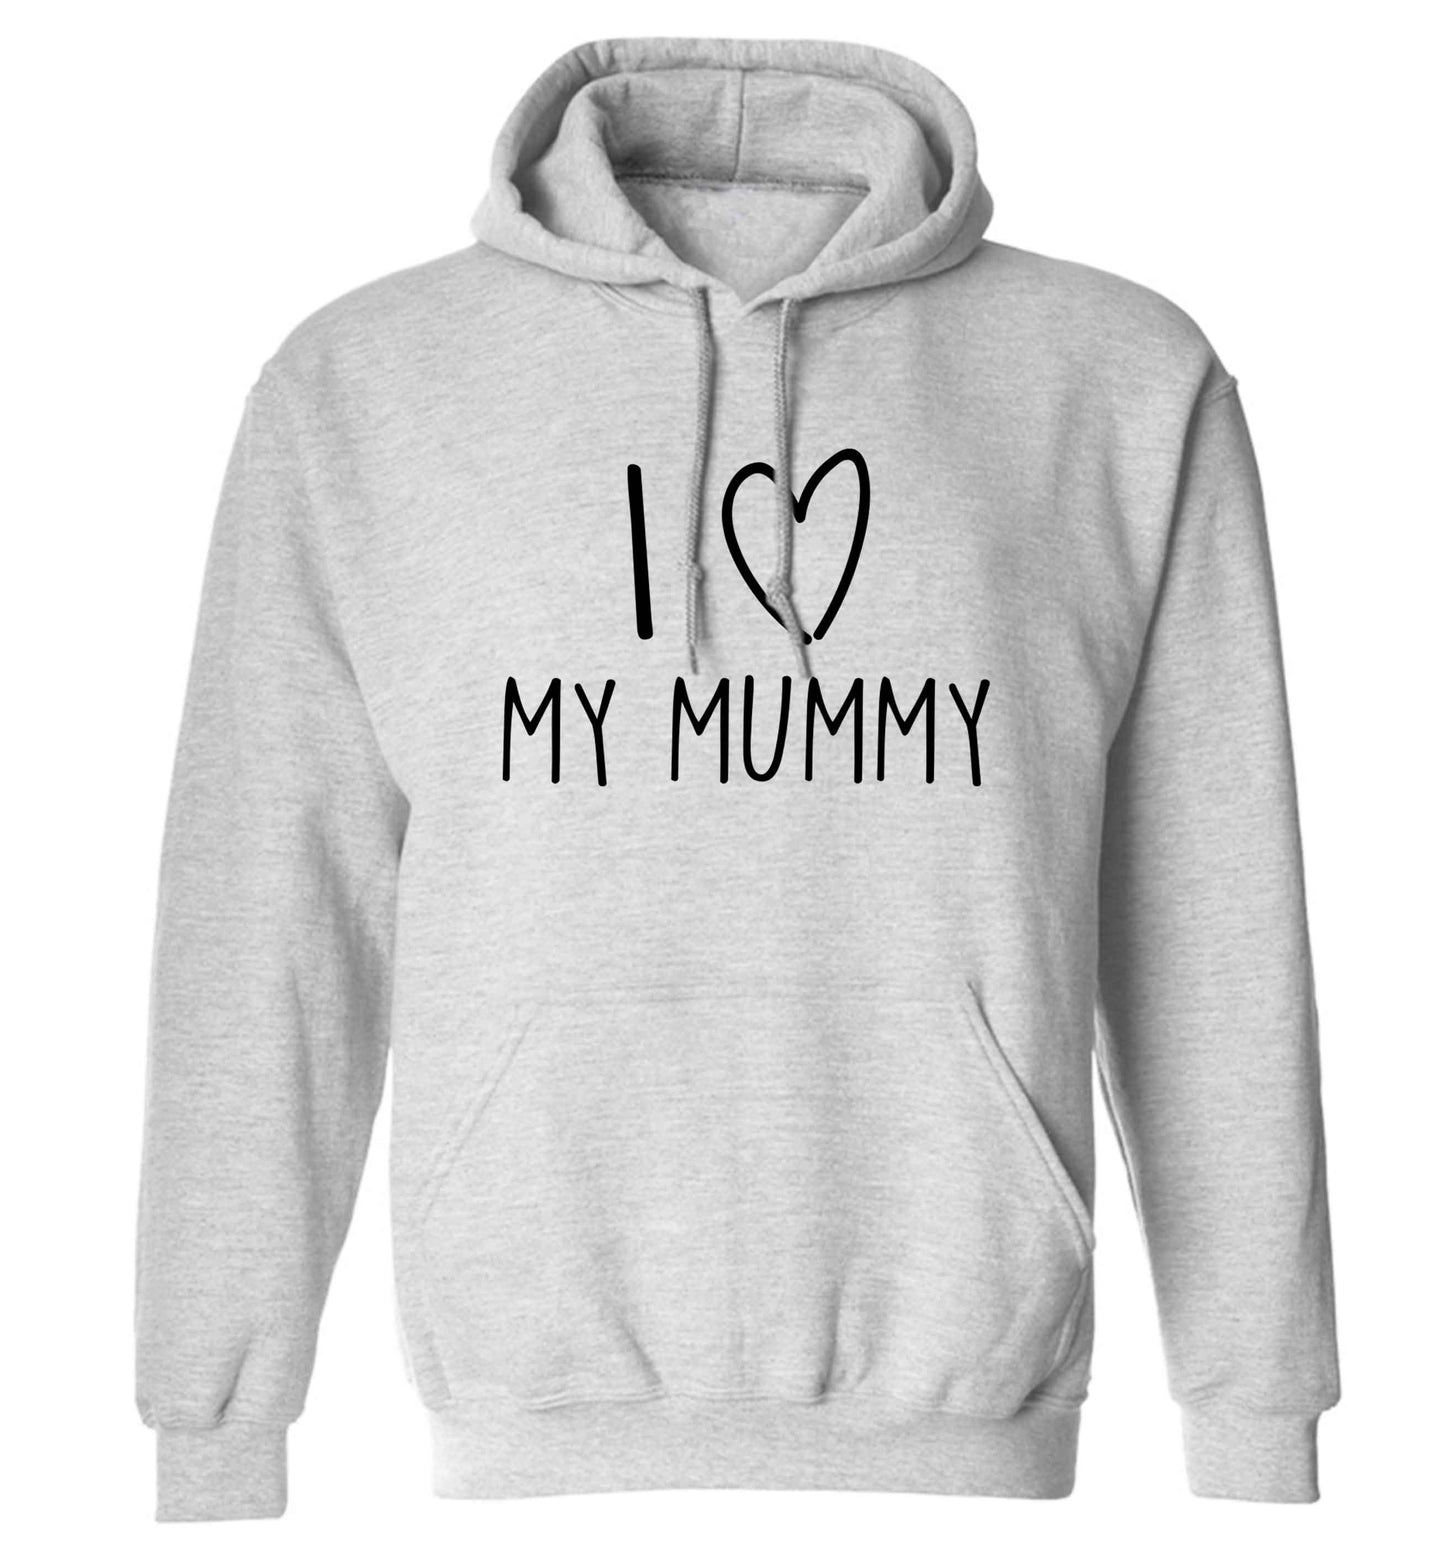 I love my mummy adults unisex grey hoodie 2XL